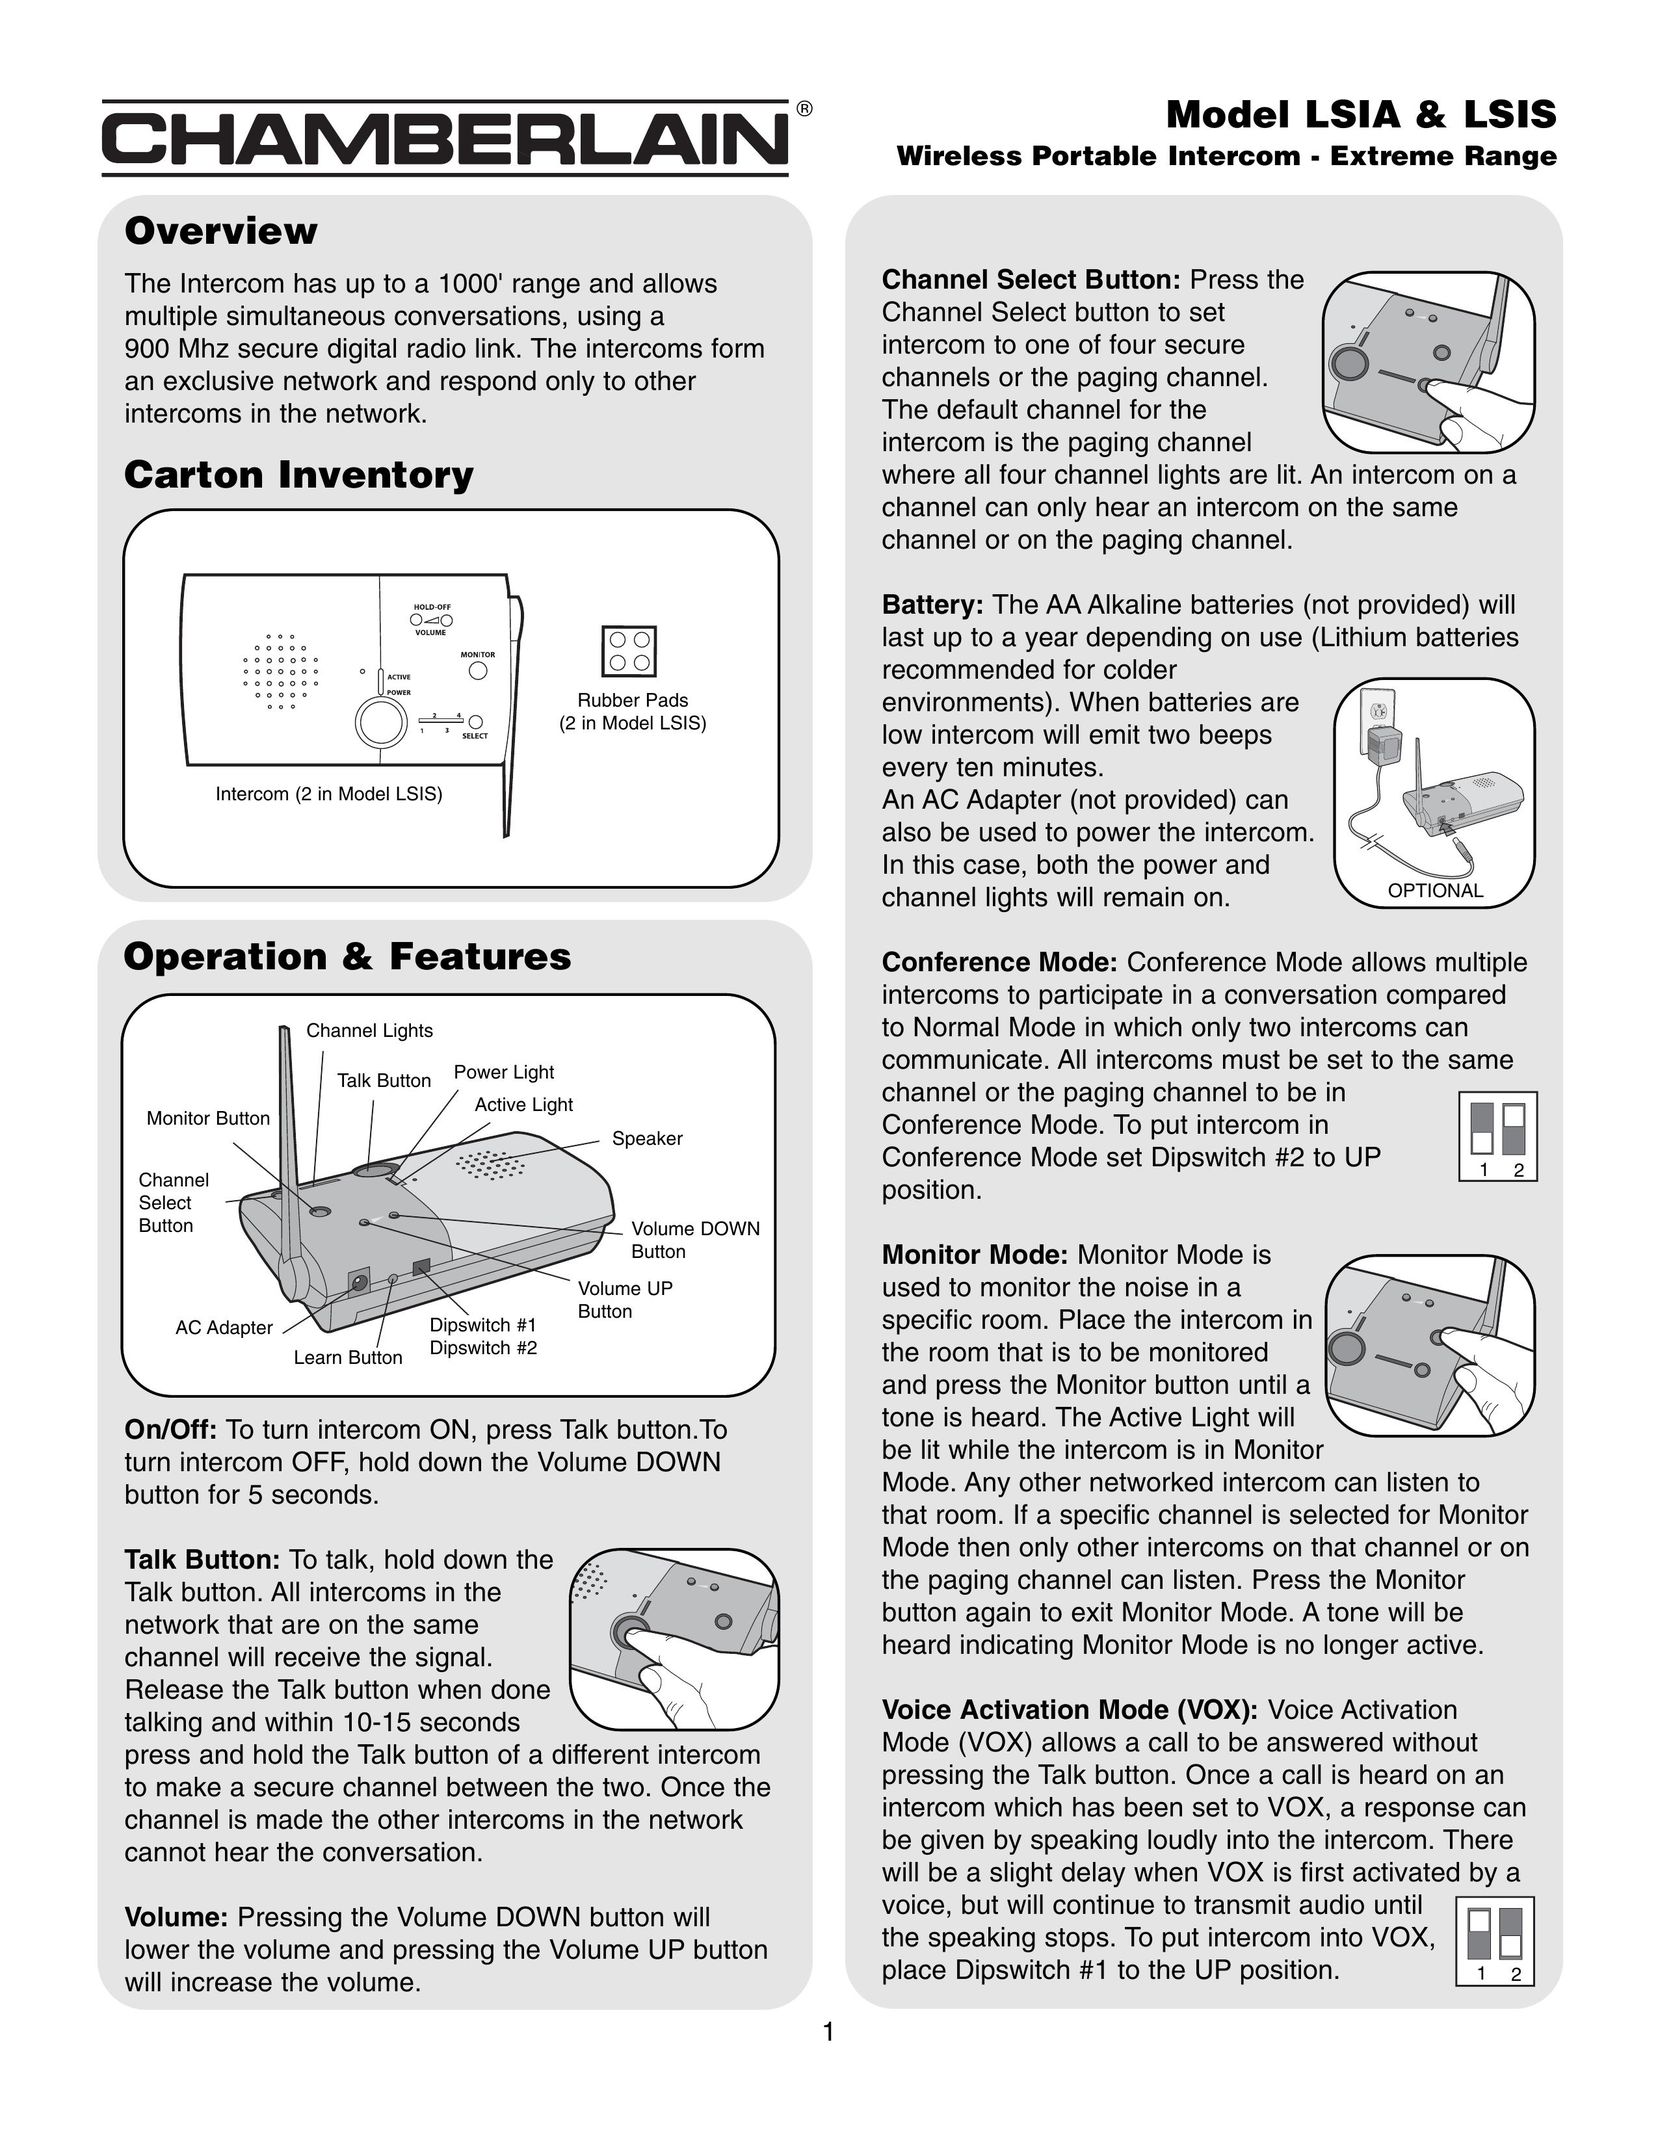 Chamberlain LSIS Intercom System User Manual